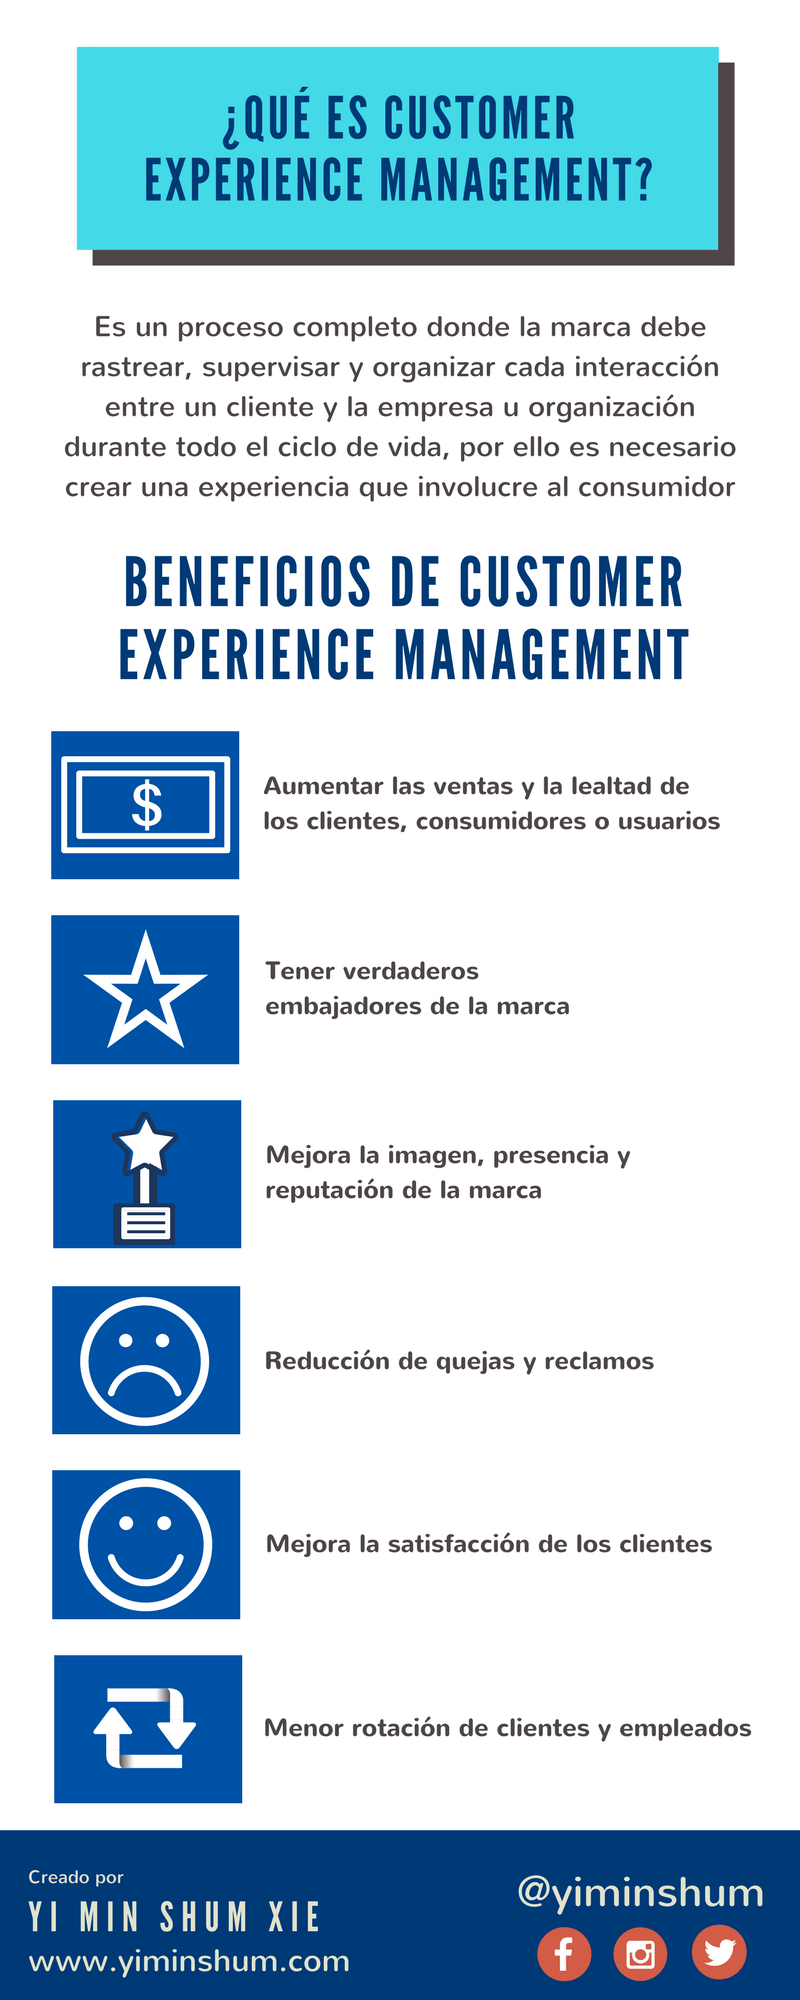 ¿Qué es Customer Experience Management? imagen